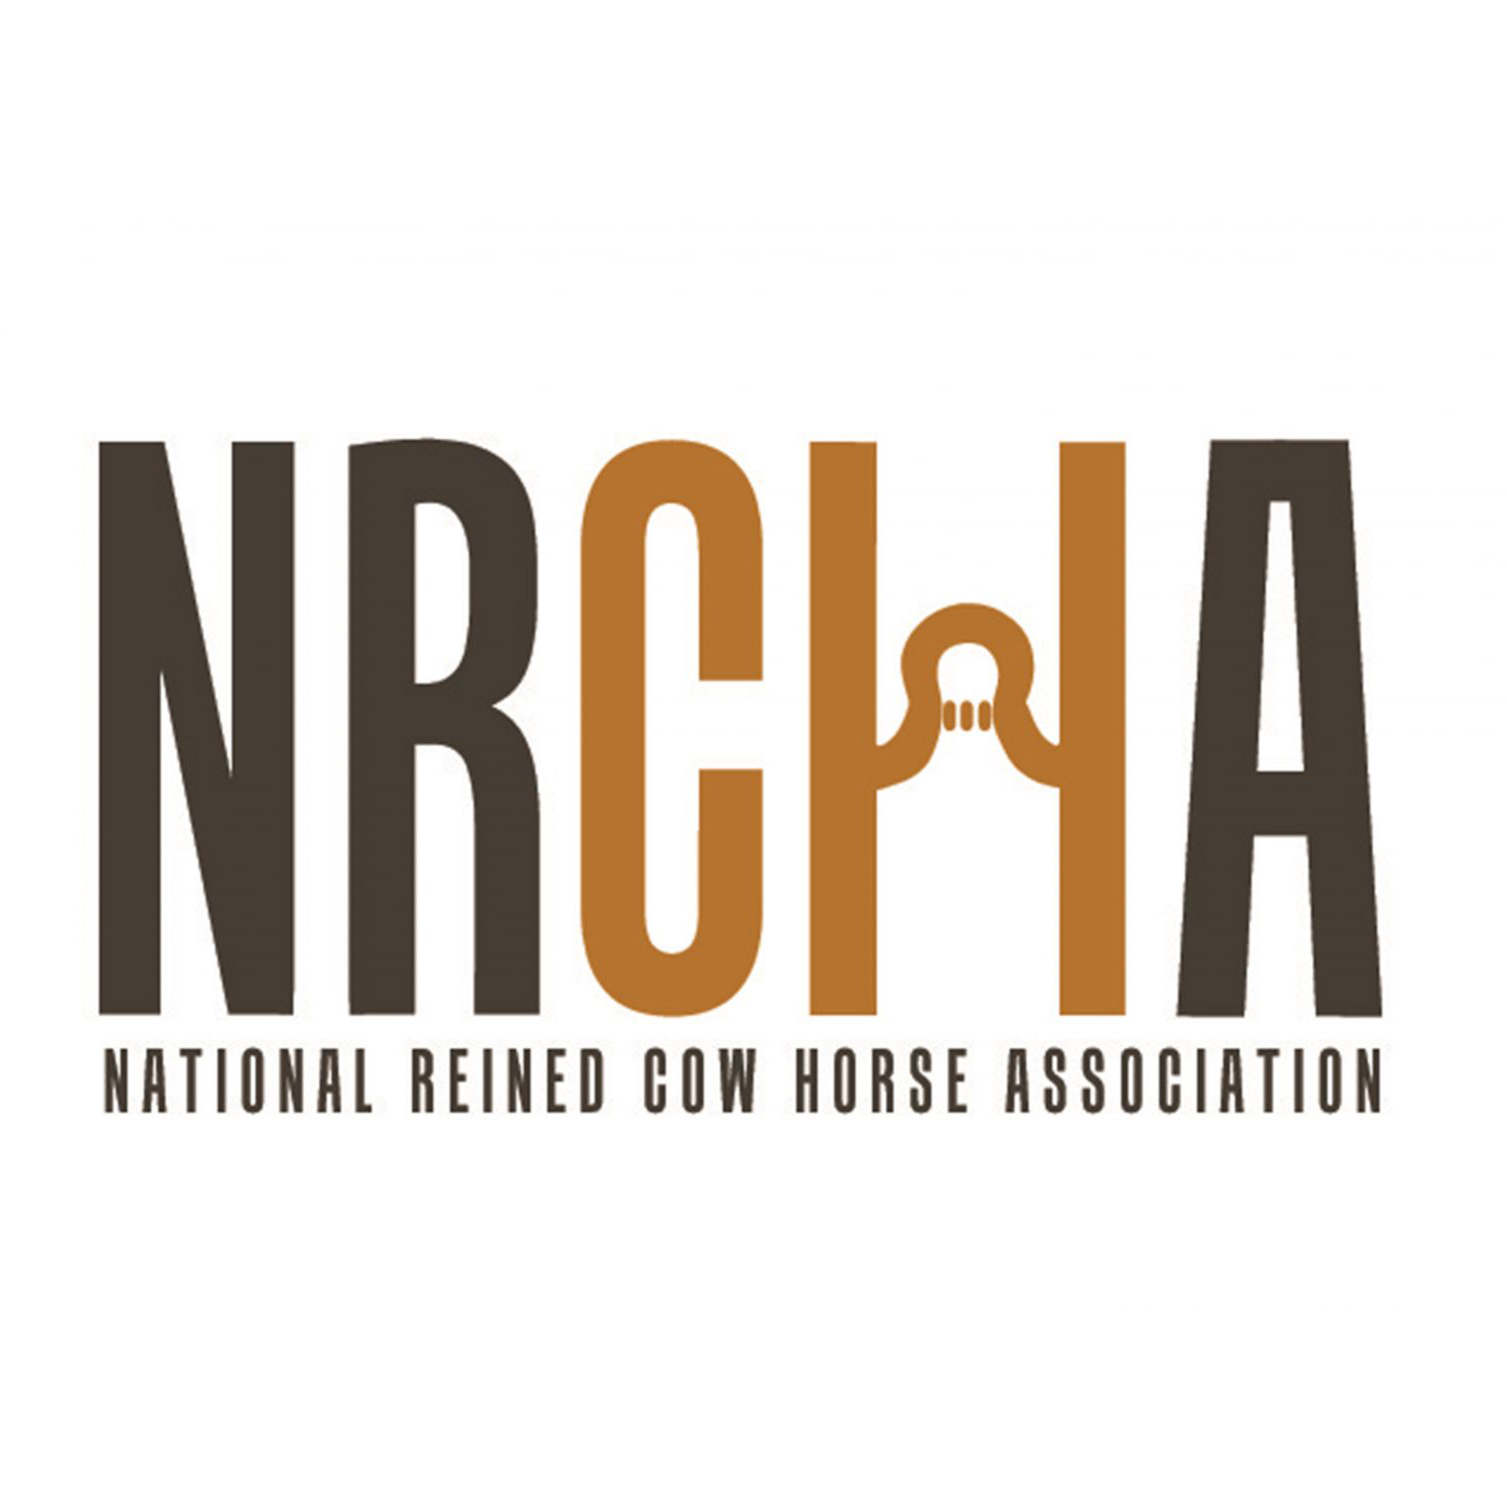 NRCHA-logo.jpg